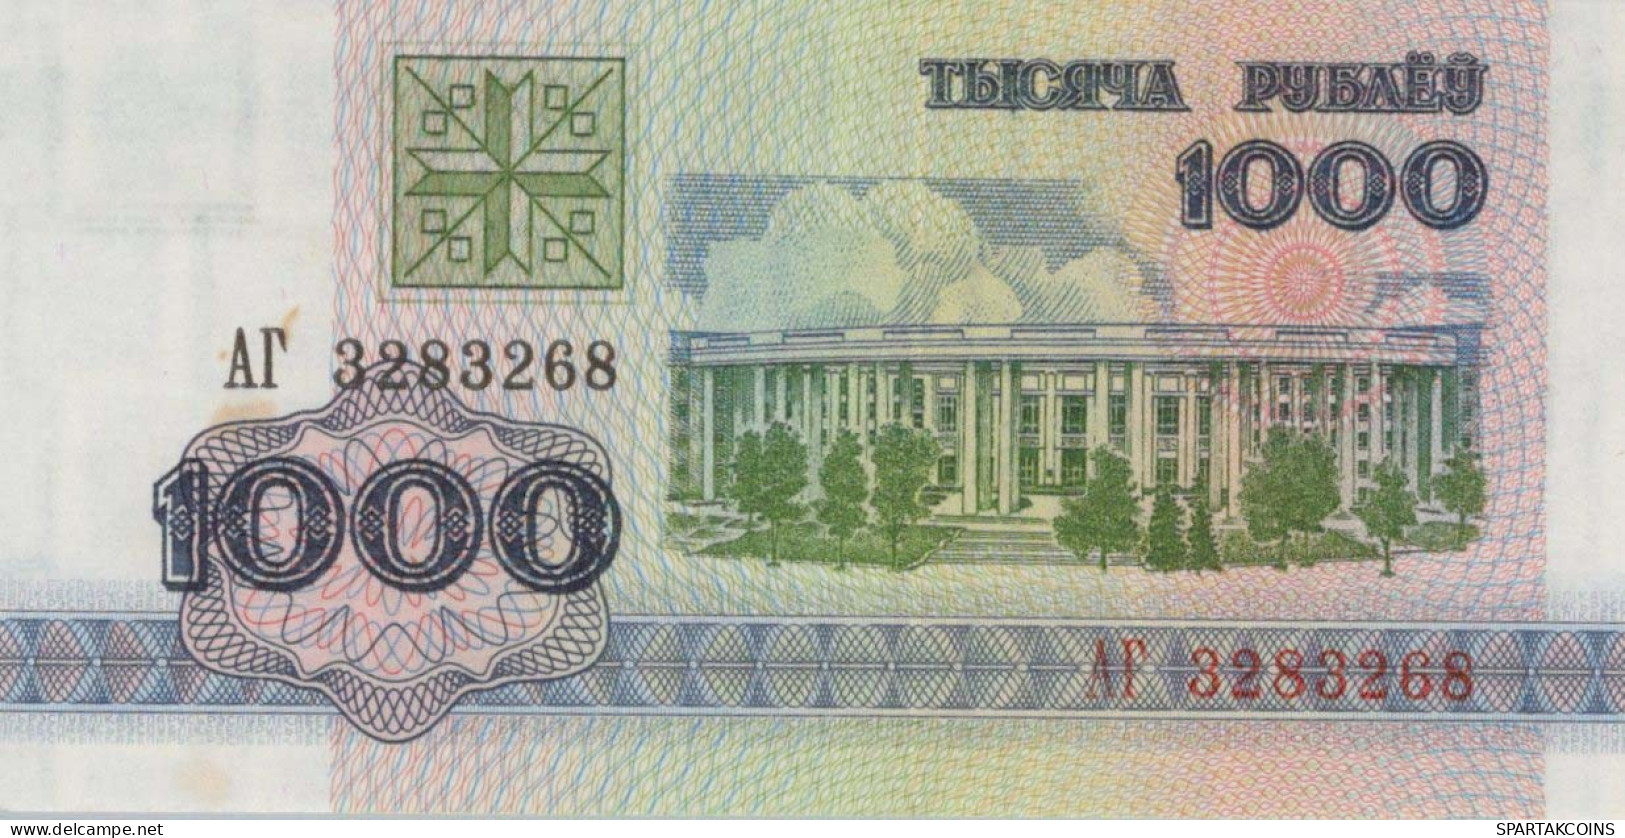 1000 RUBLES 1992 BELARUS Papiergeld Banknote #PJ293 - [11] Emisiones Locales